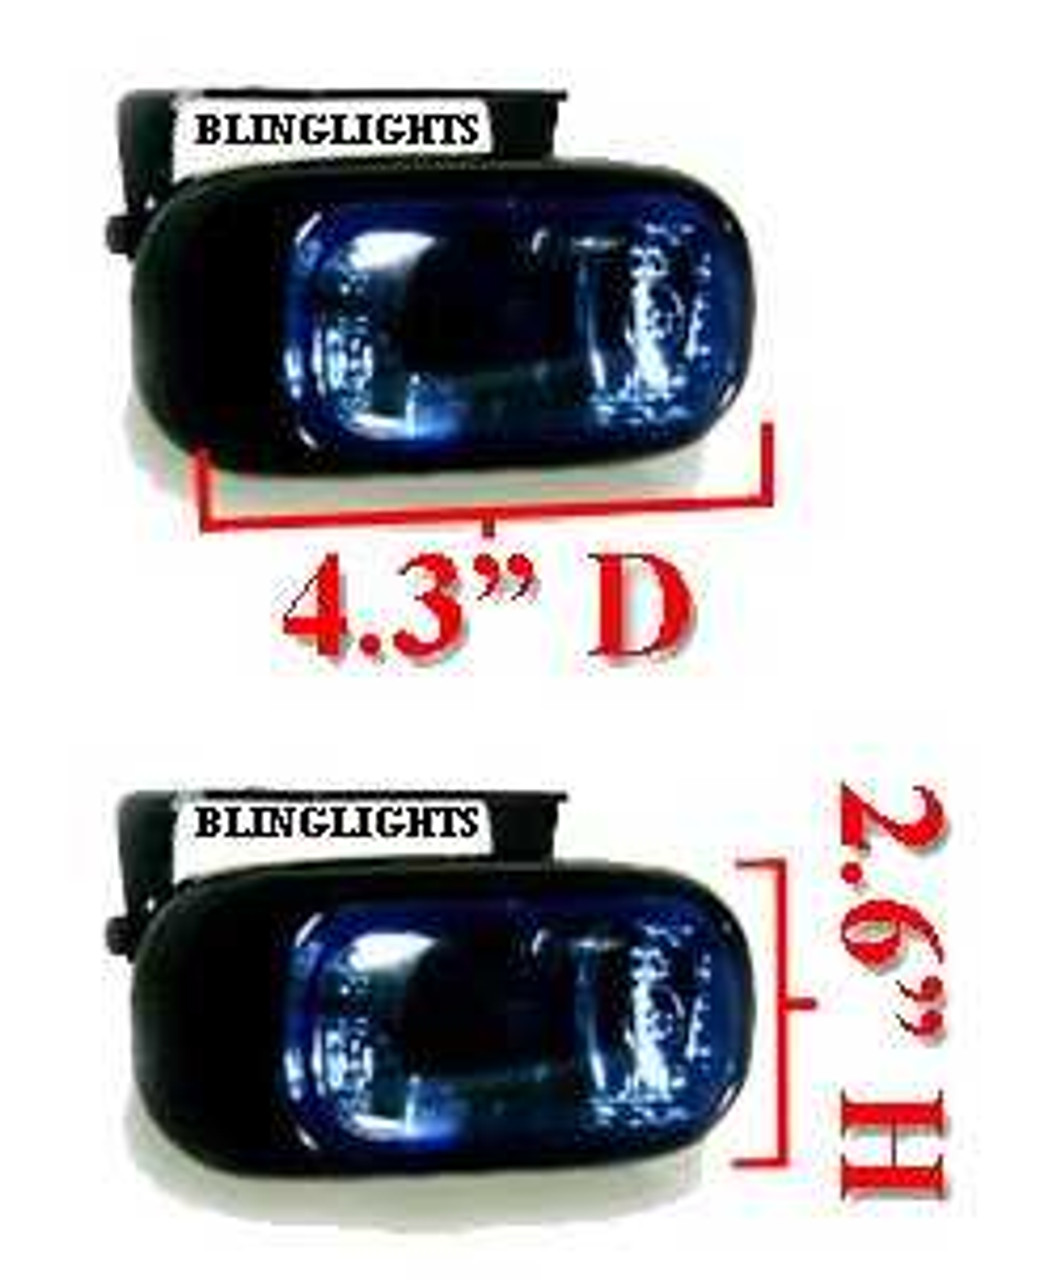 2003-2006 HYUNDAI TIBURON VIS RACING BODY KIT FOG LIGHTS DRIVING LAMPS LIGHT LAMP KIT 2004 2005